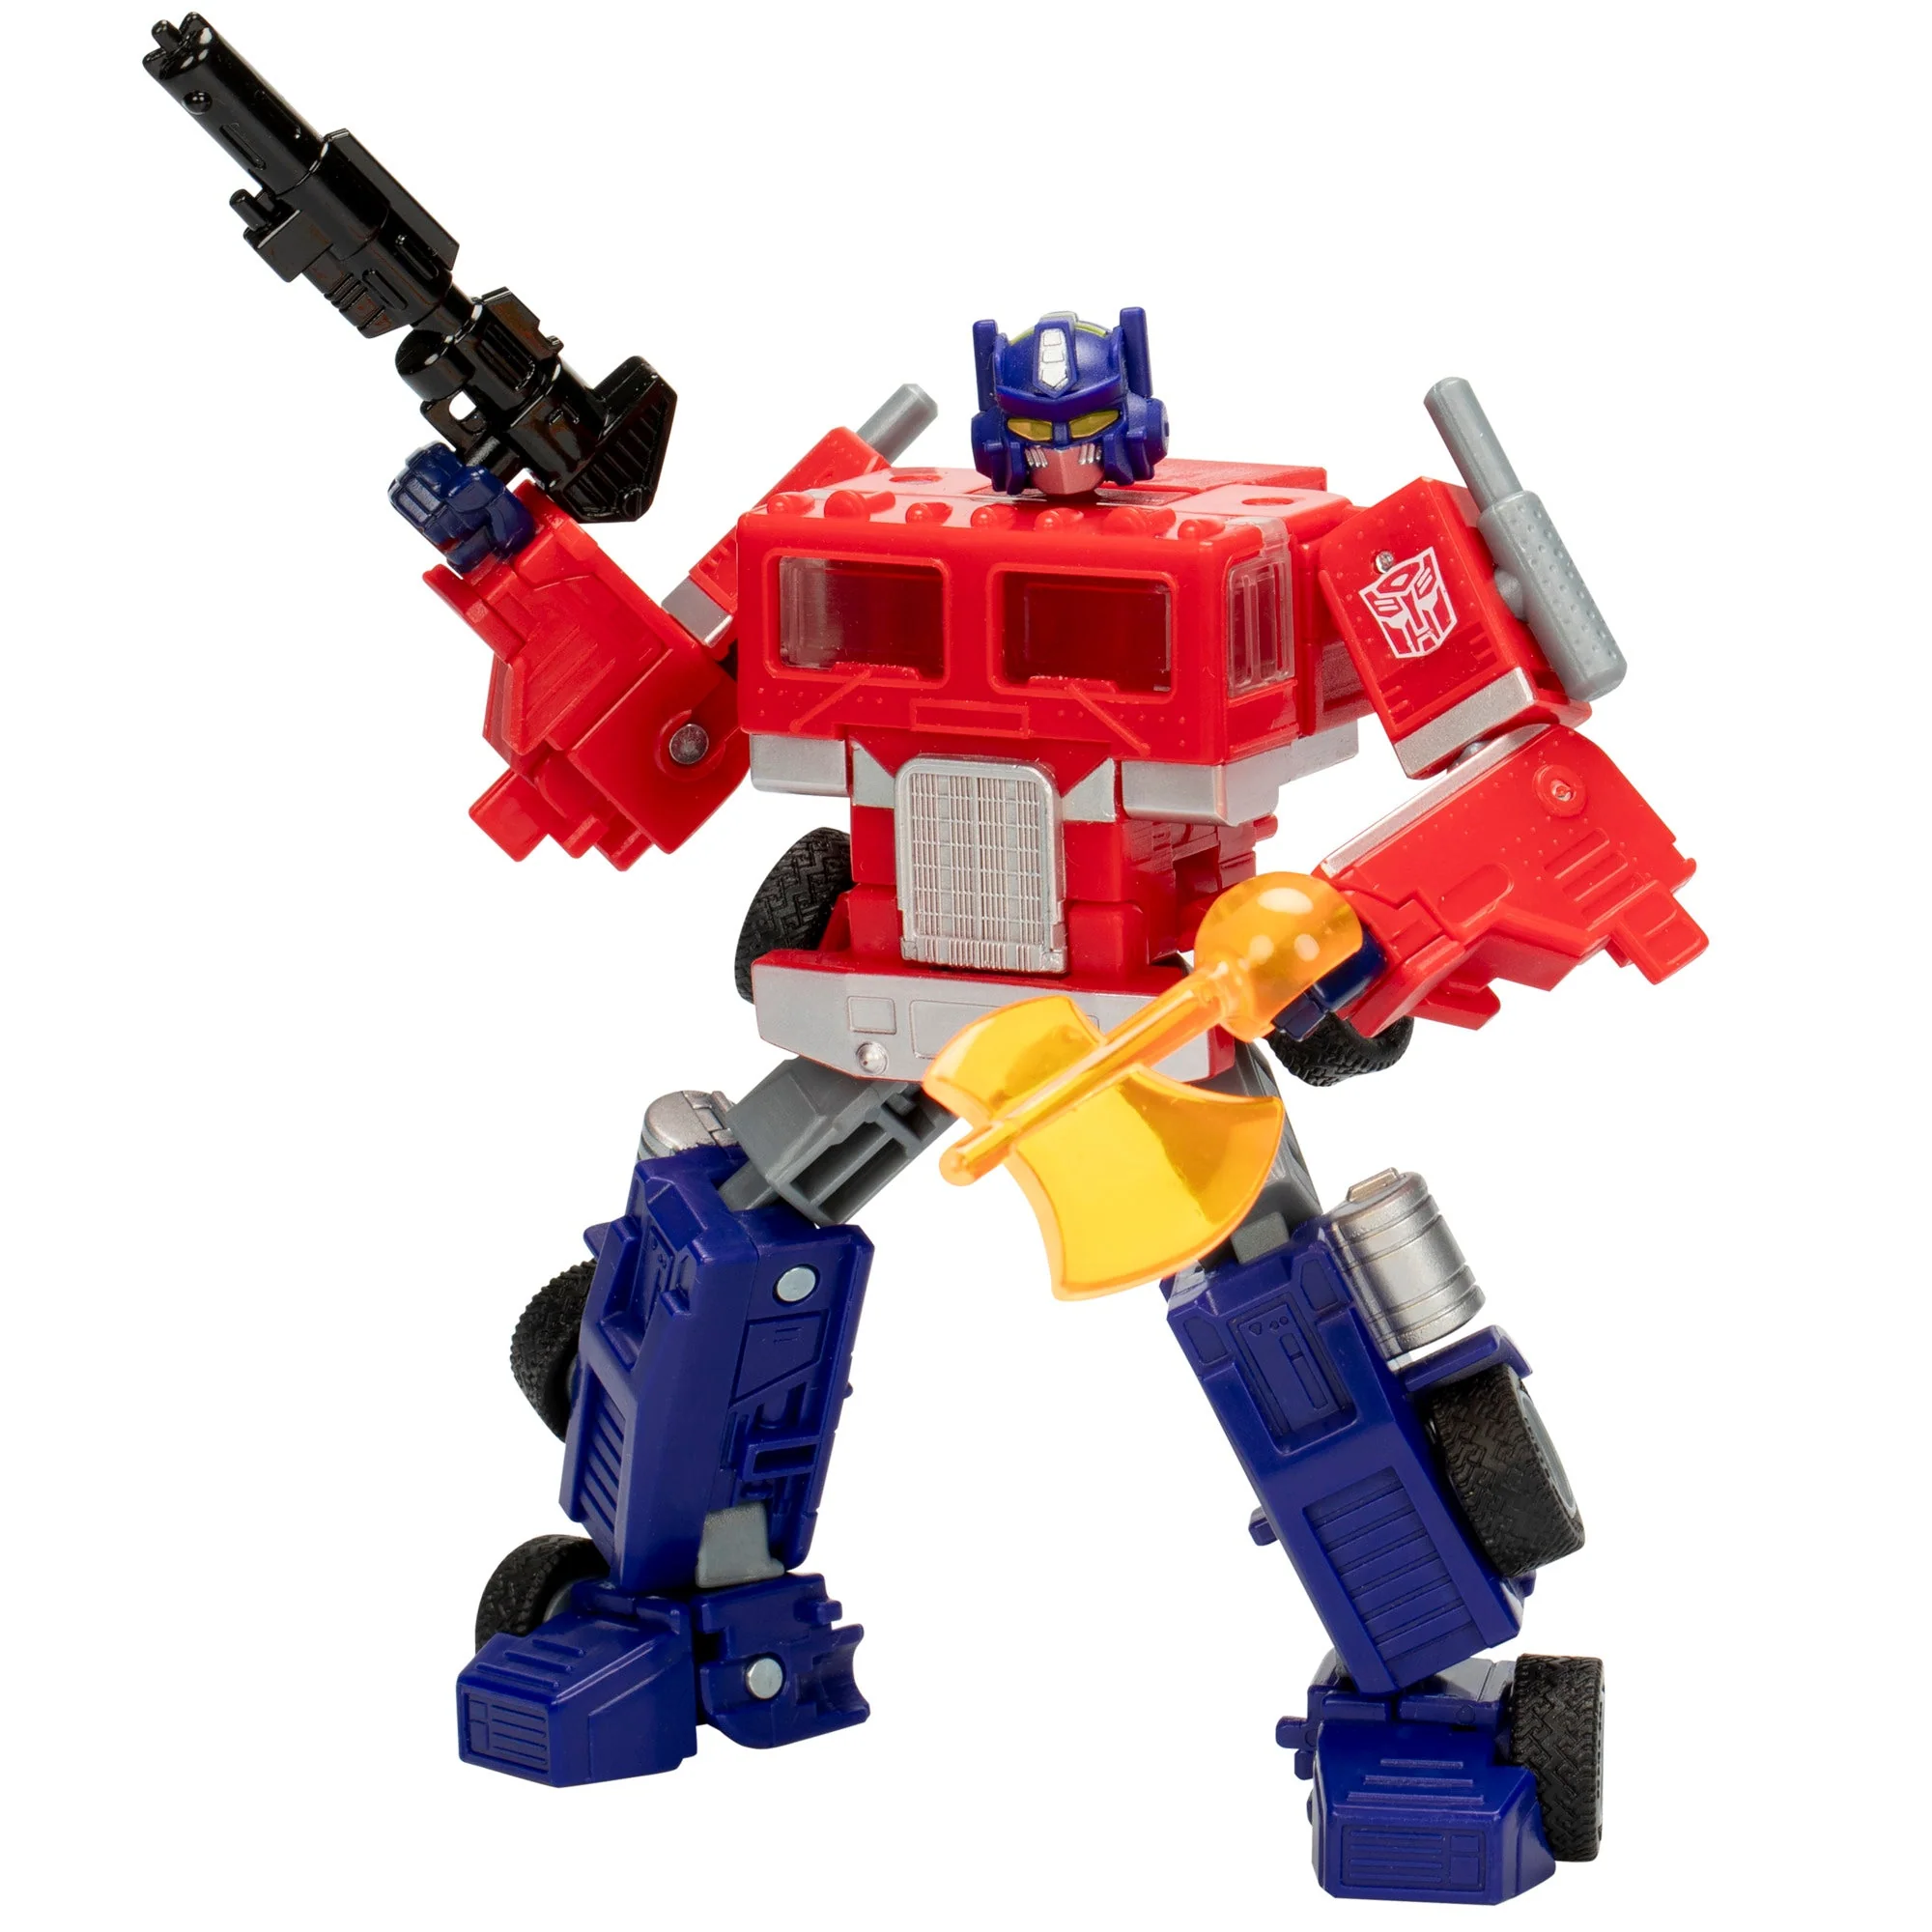 Hasbro Transformers Deluxe Class Optimus Prime